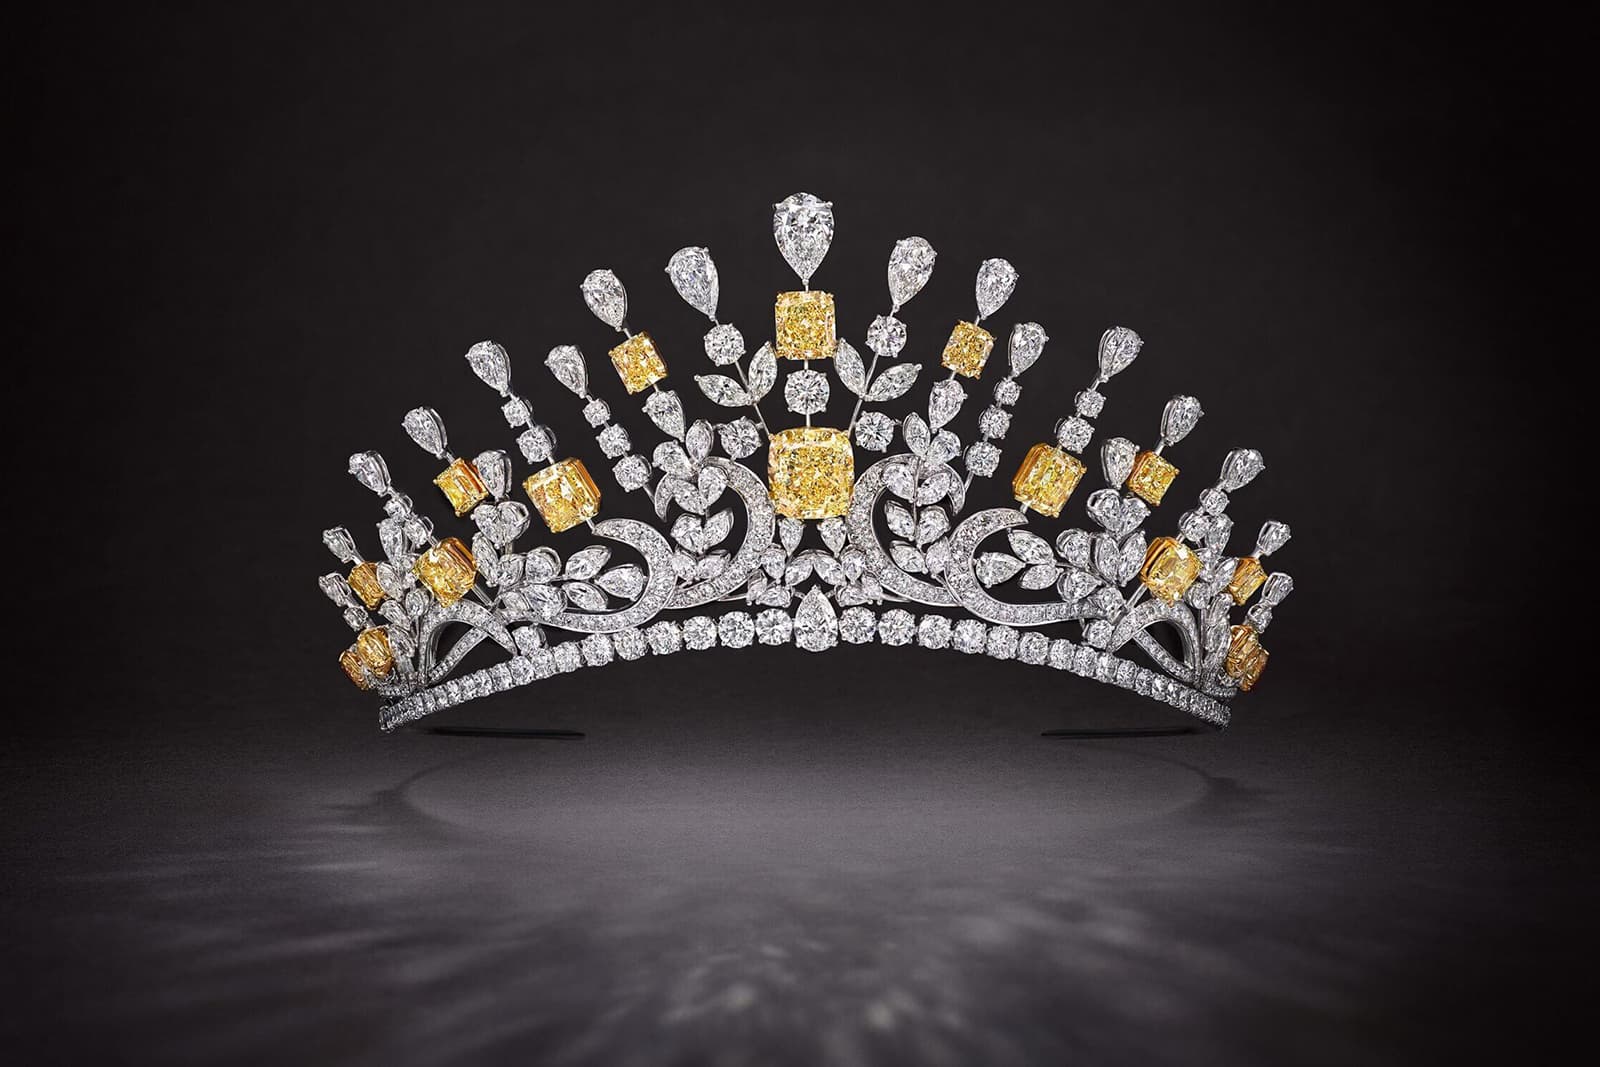 Graff tiara with 177.64 carats of white and yellow diamonds